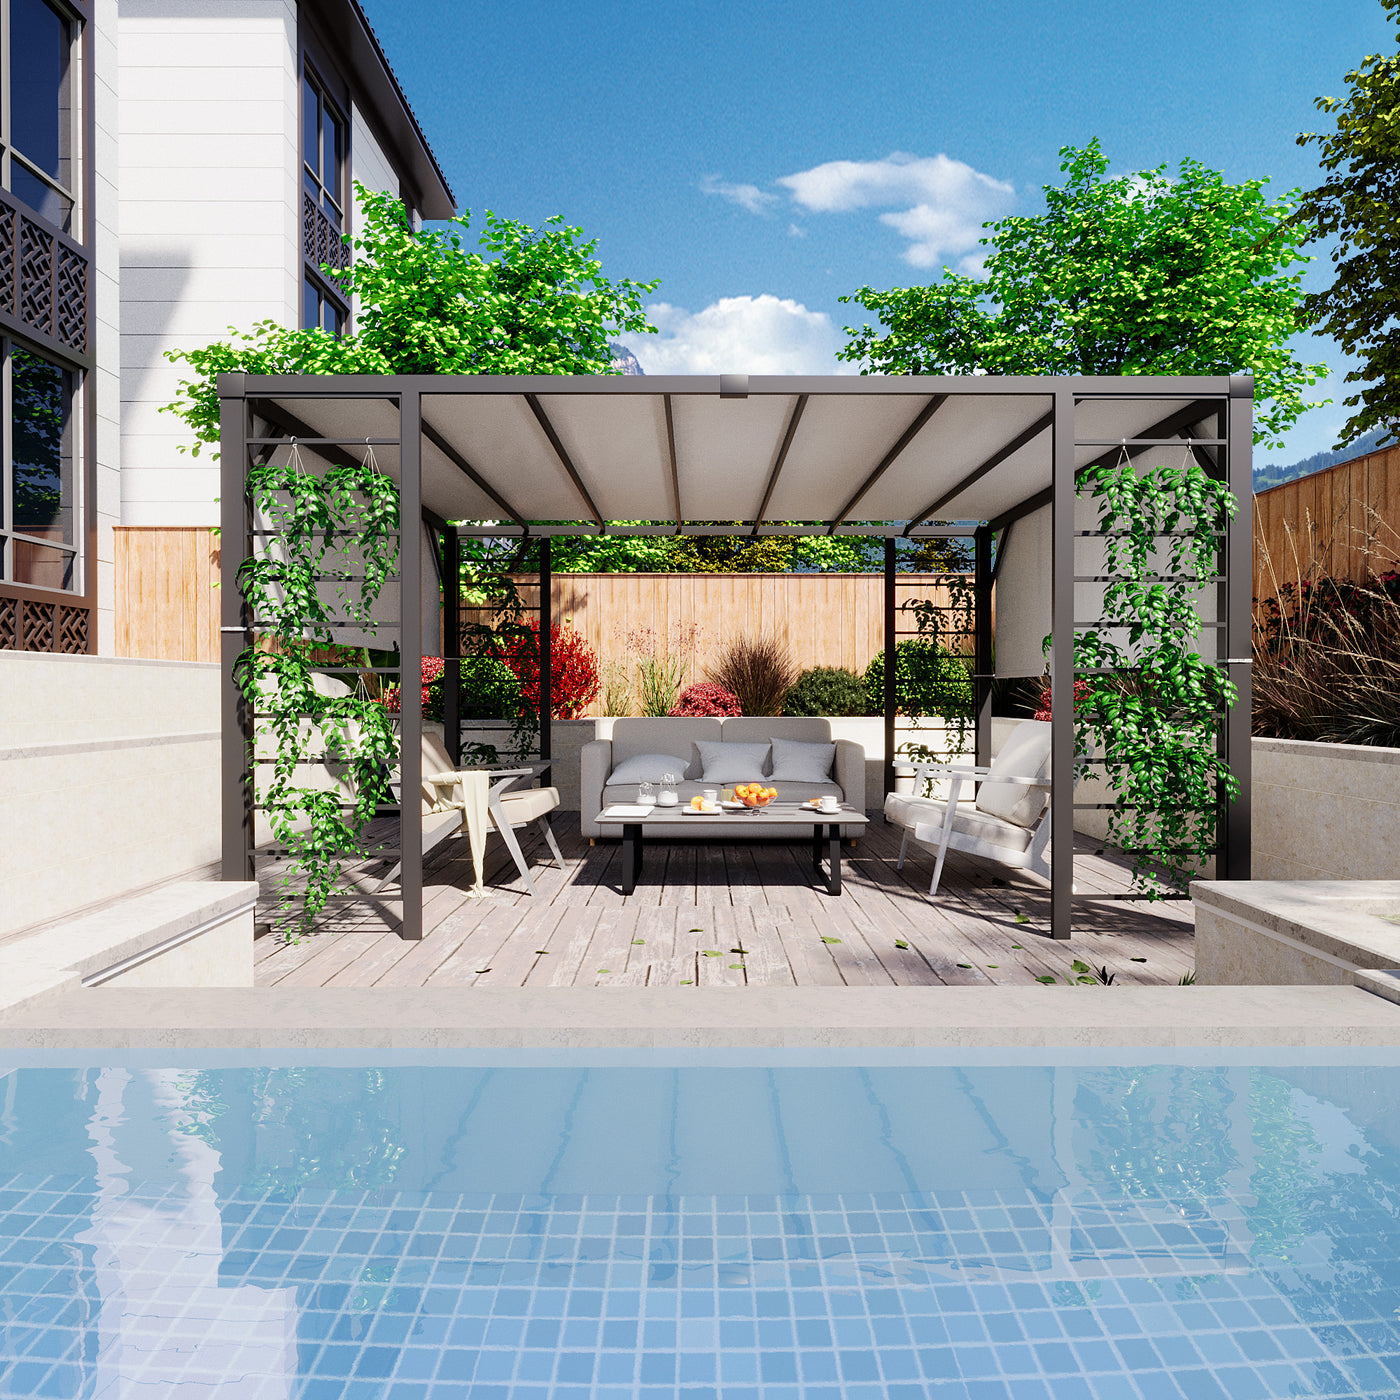 HAPPATIO 10' X 12' Outdoor Pergola, Retractable Pergola Canopy with Adjustable Shade，Aluminum Pergola Shade for Patio, Backyard, Garden